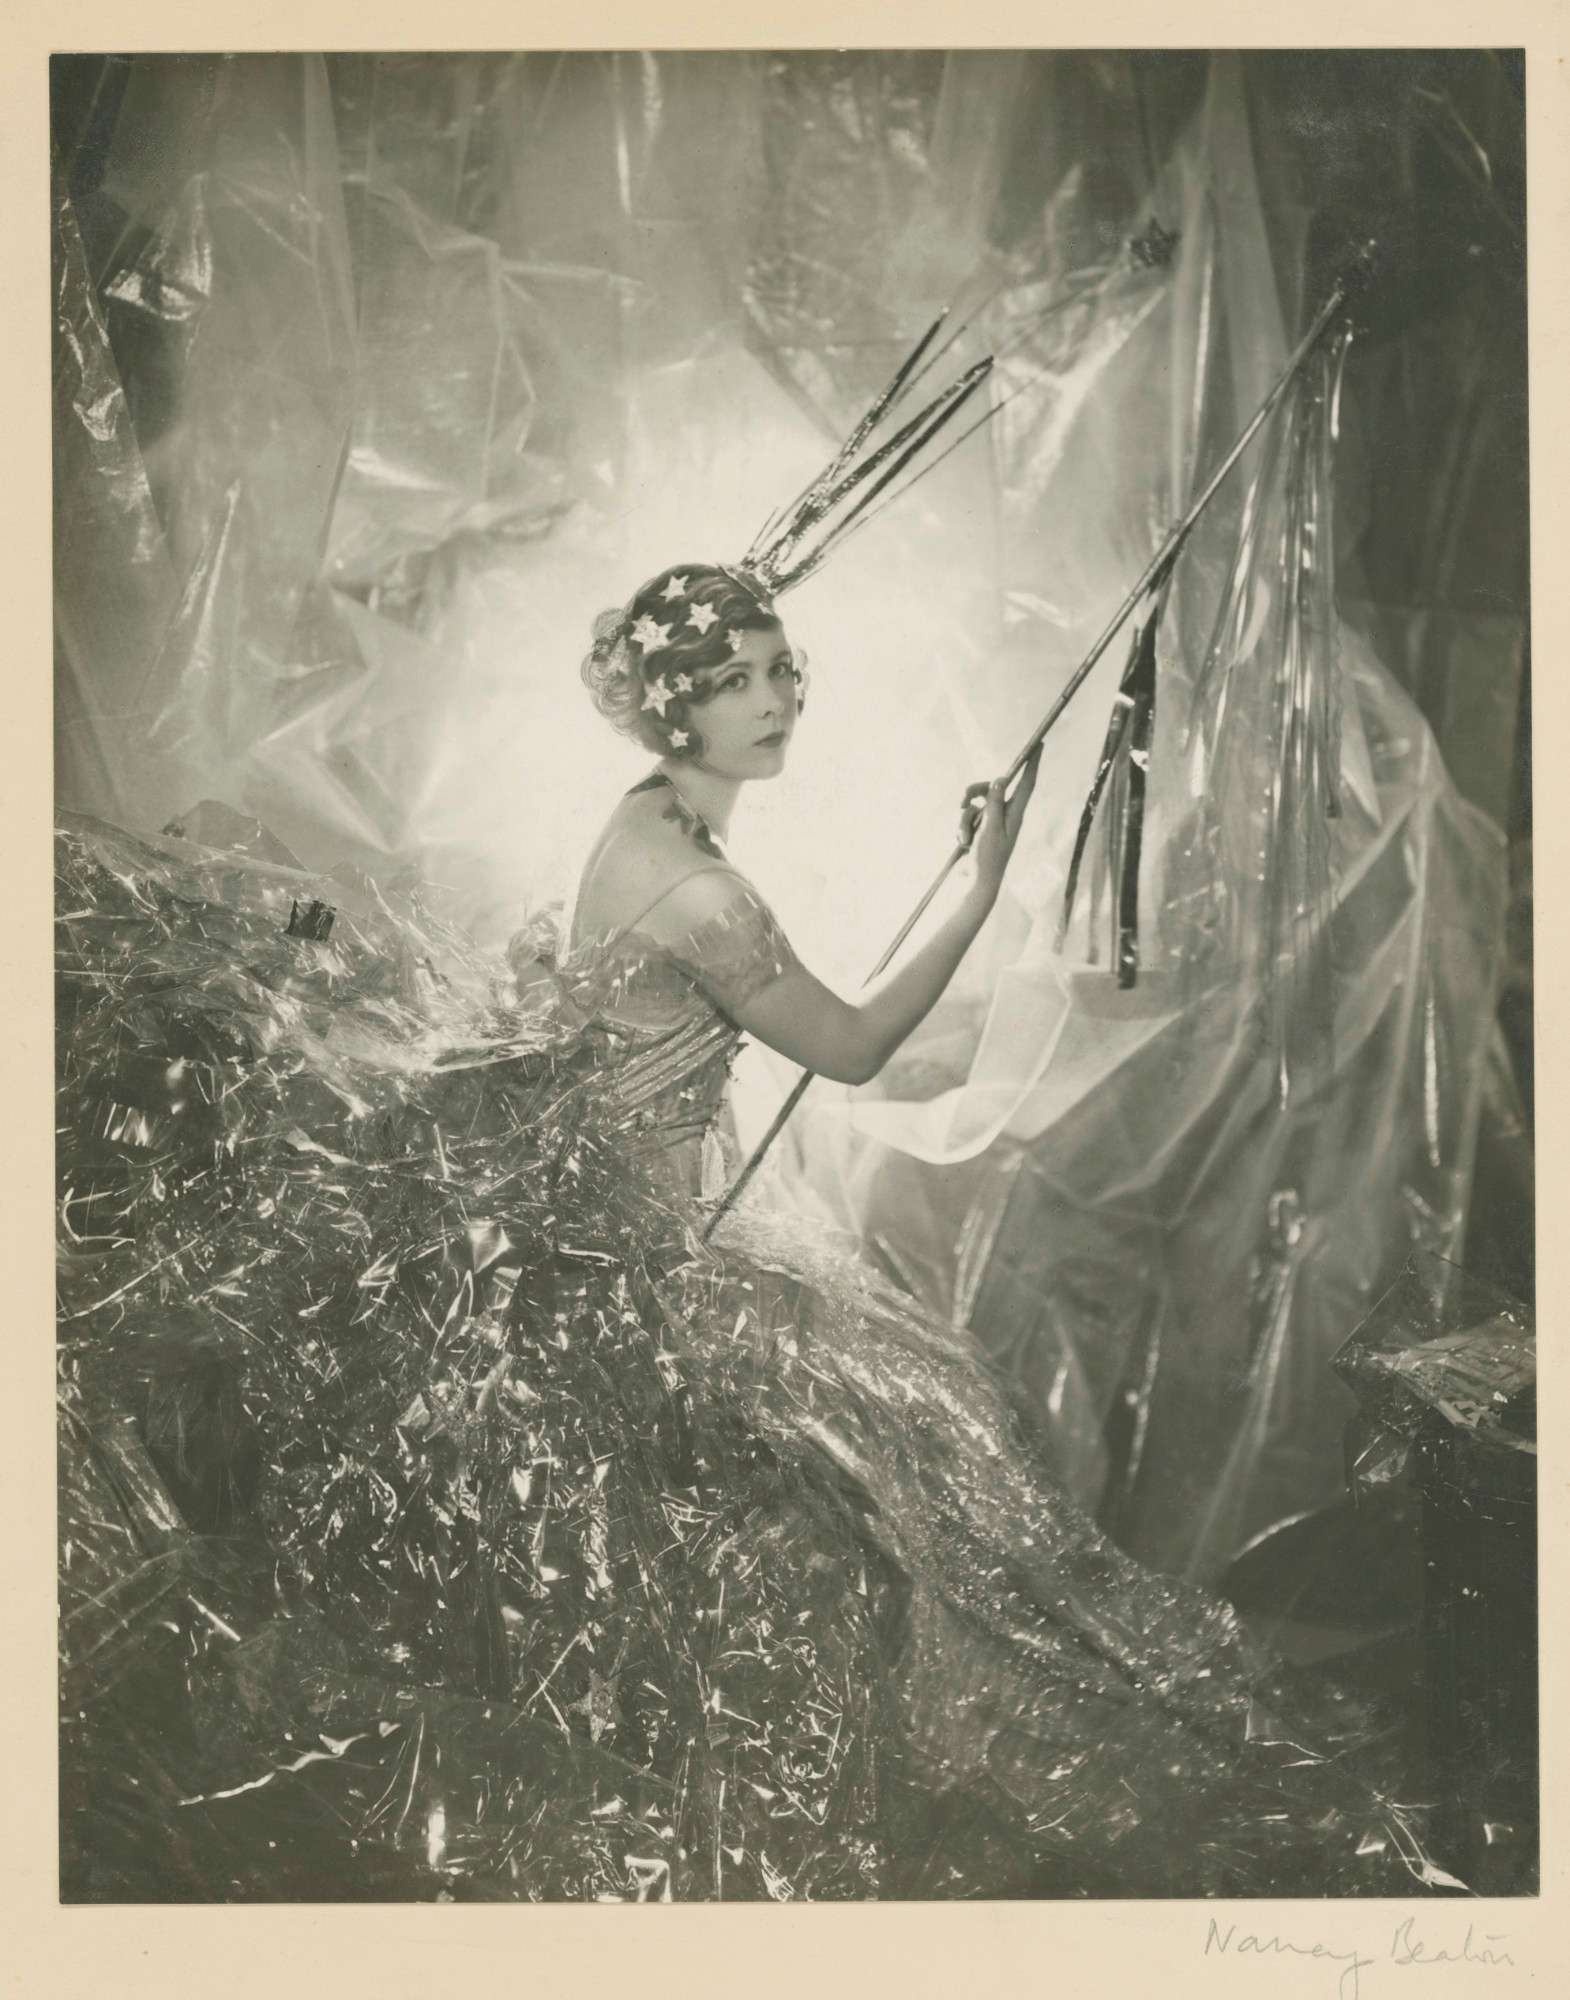 &laquo;Нэнси Битон в образе падающей звезды&raquo;, 1929 год